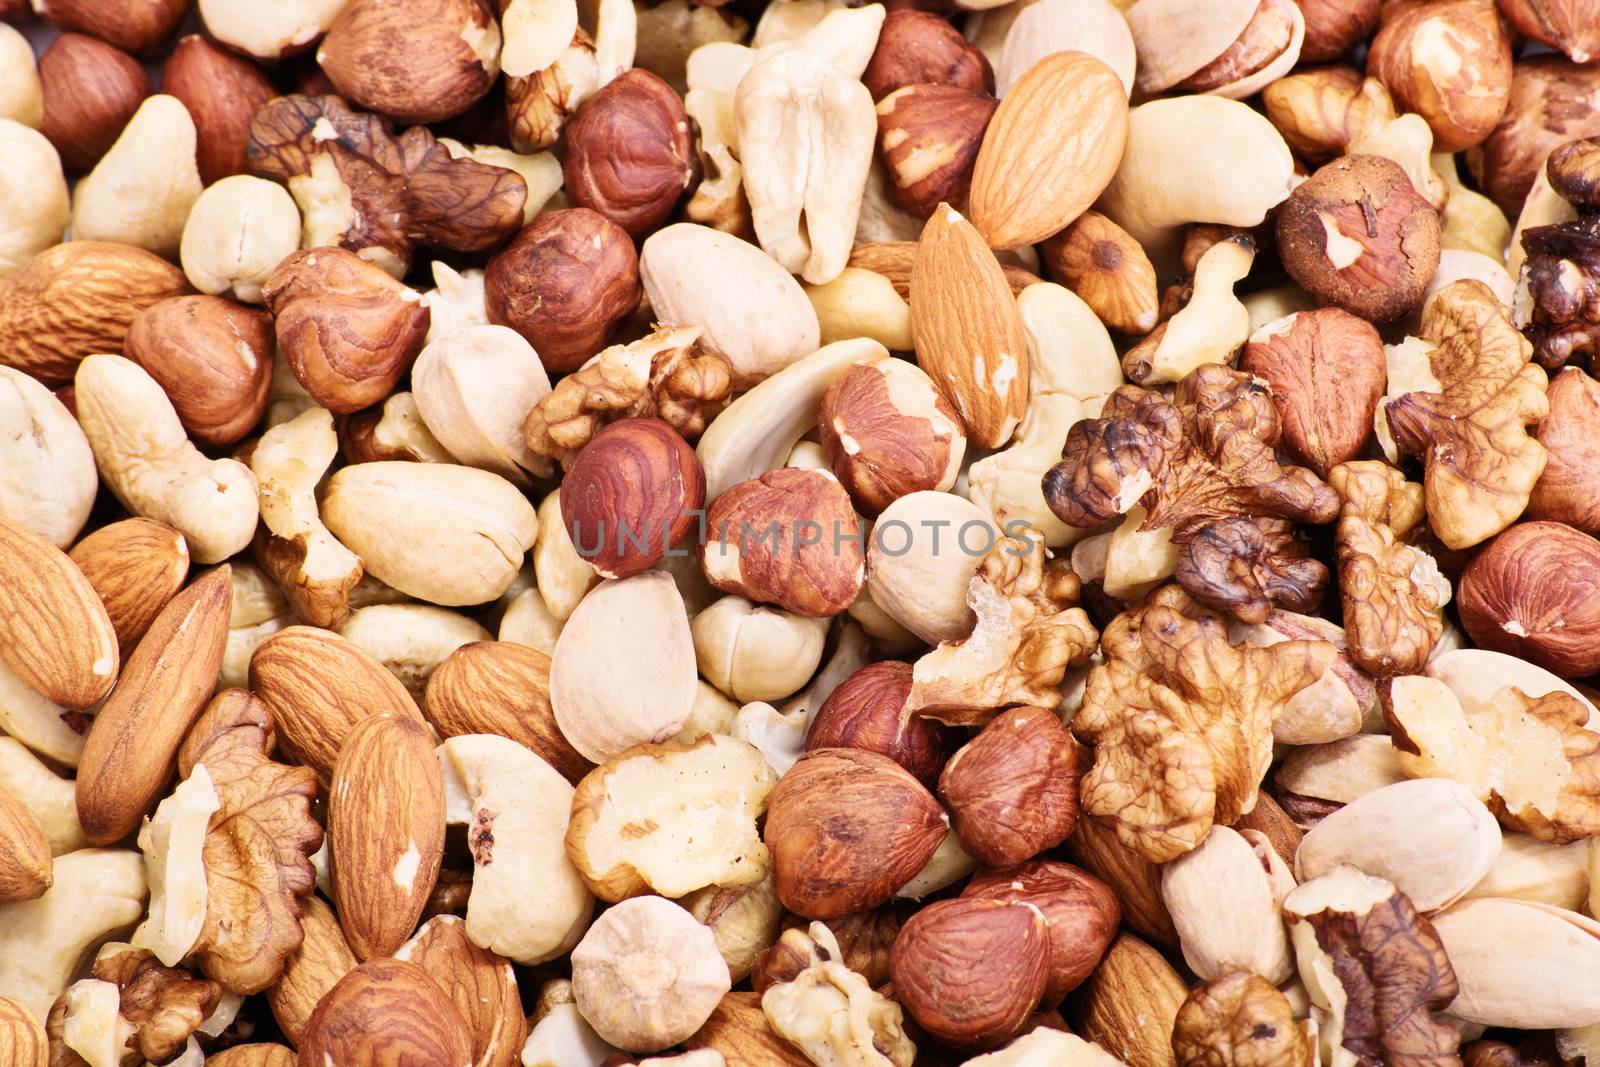 Mixture of almonds, hazelnuts, walnuts, cashews and pistachios.